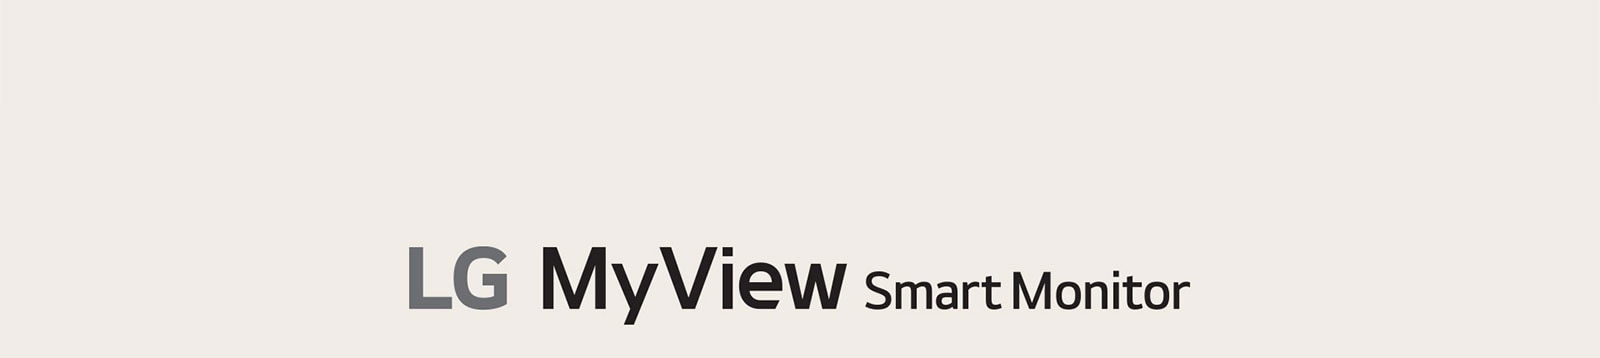 LG MyView Smart Monitor-logo.